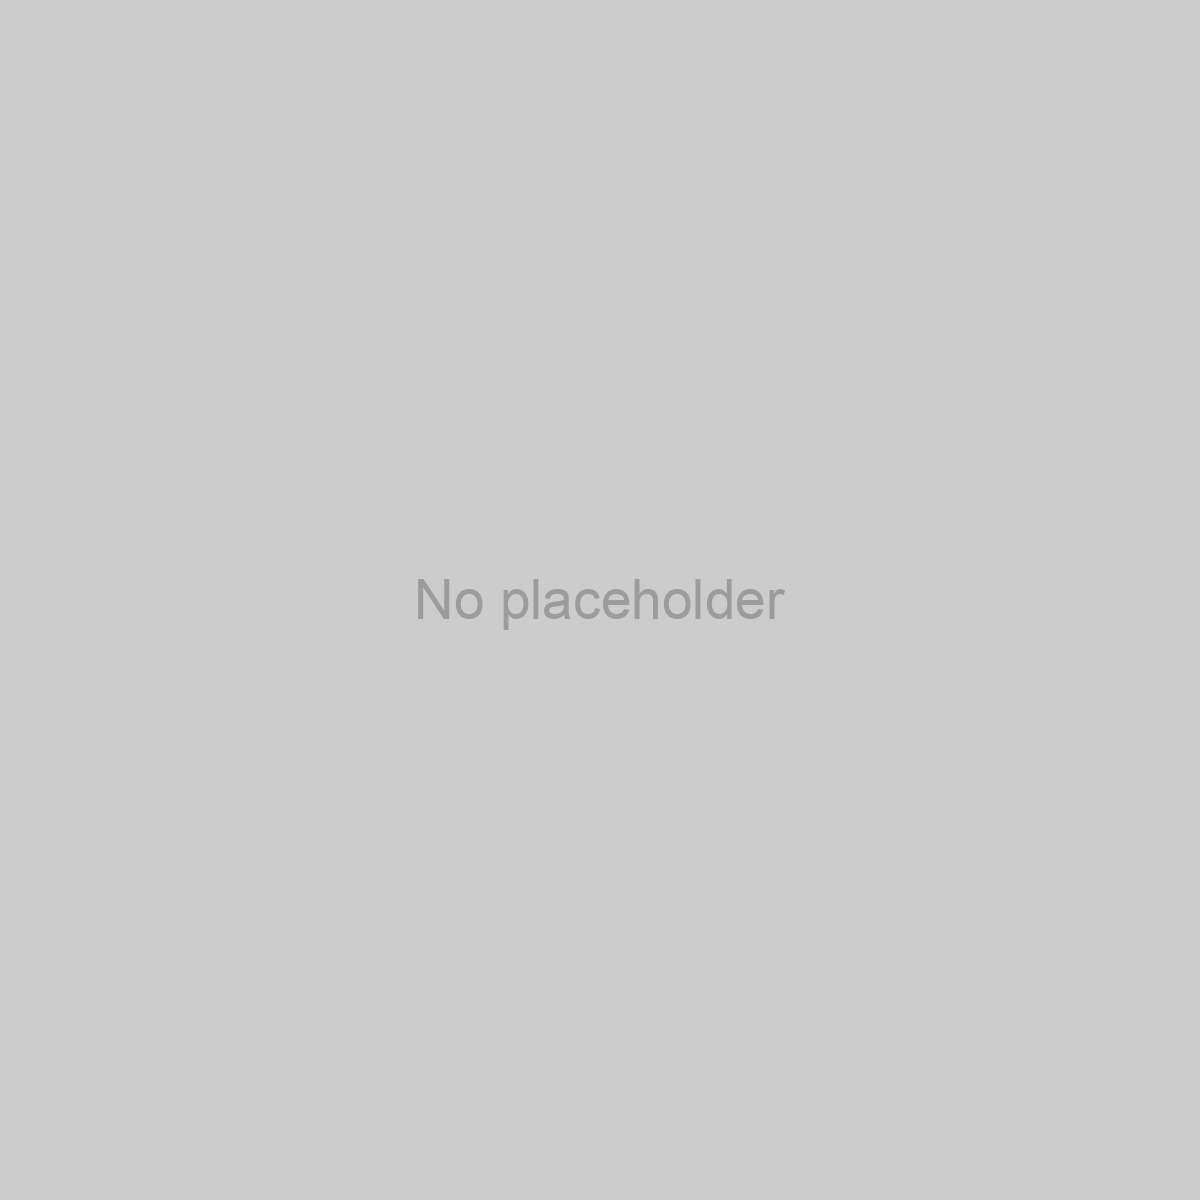 No Placeholder Image